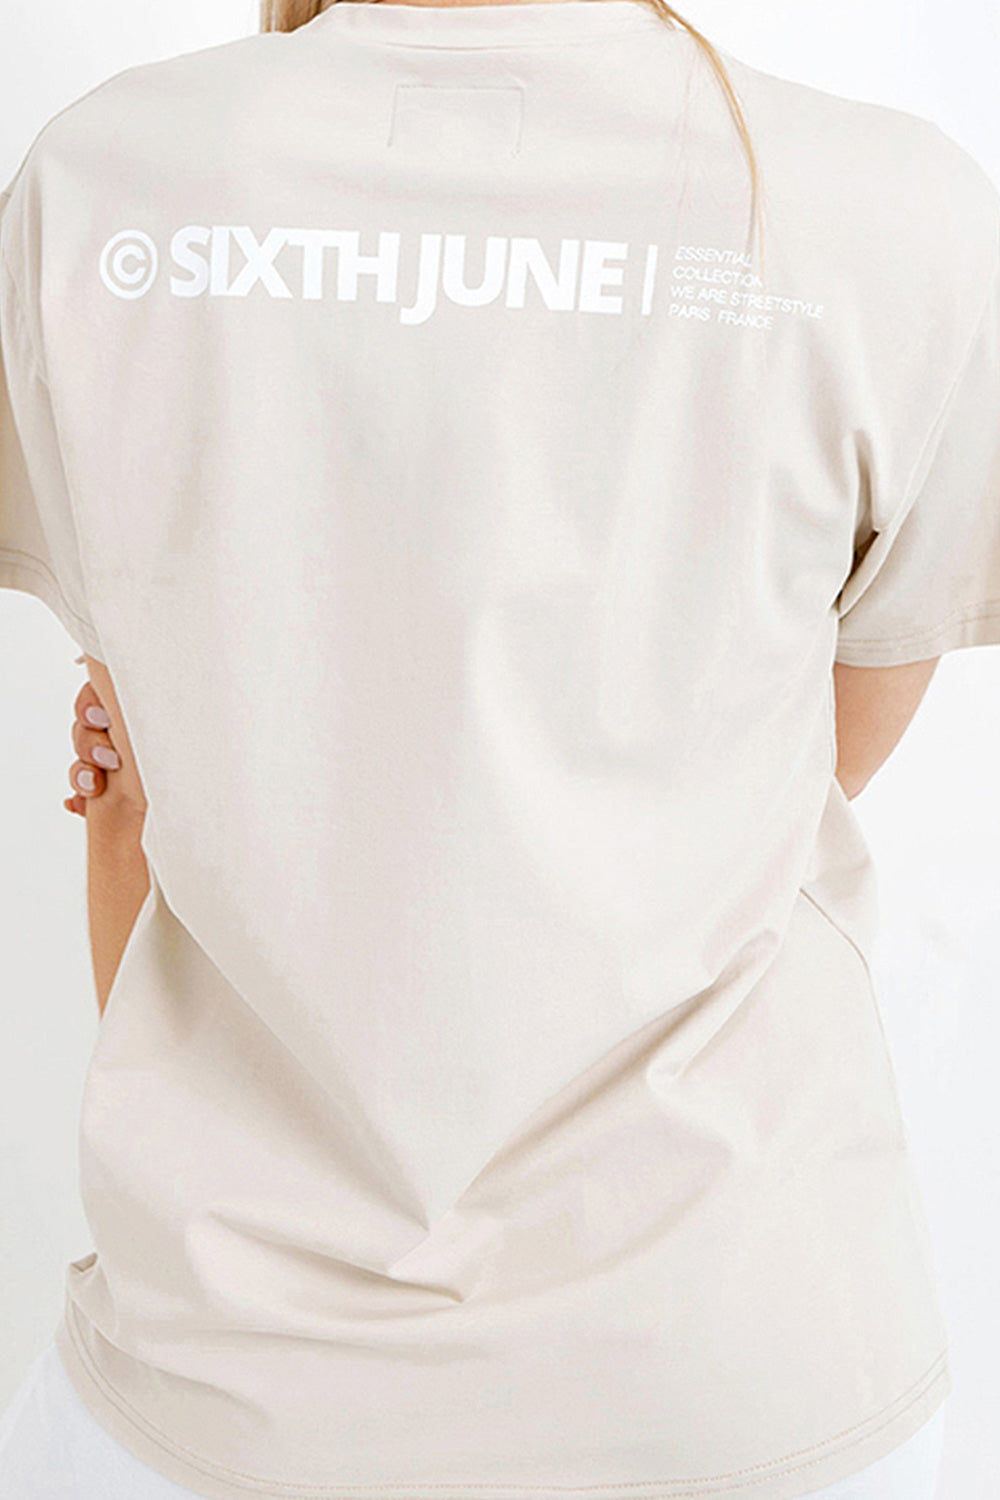 Sixth June - T-shirt double logo Beige clair